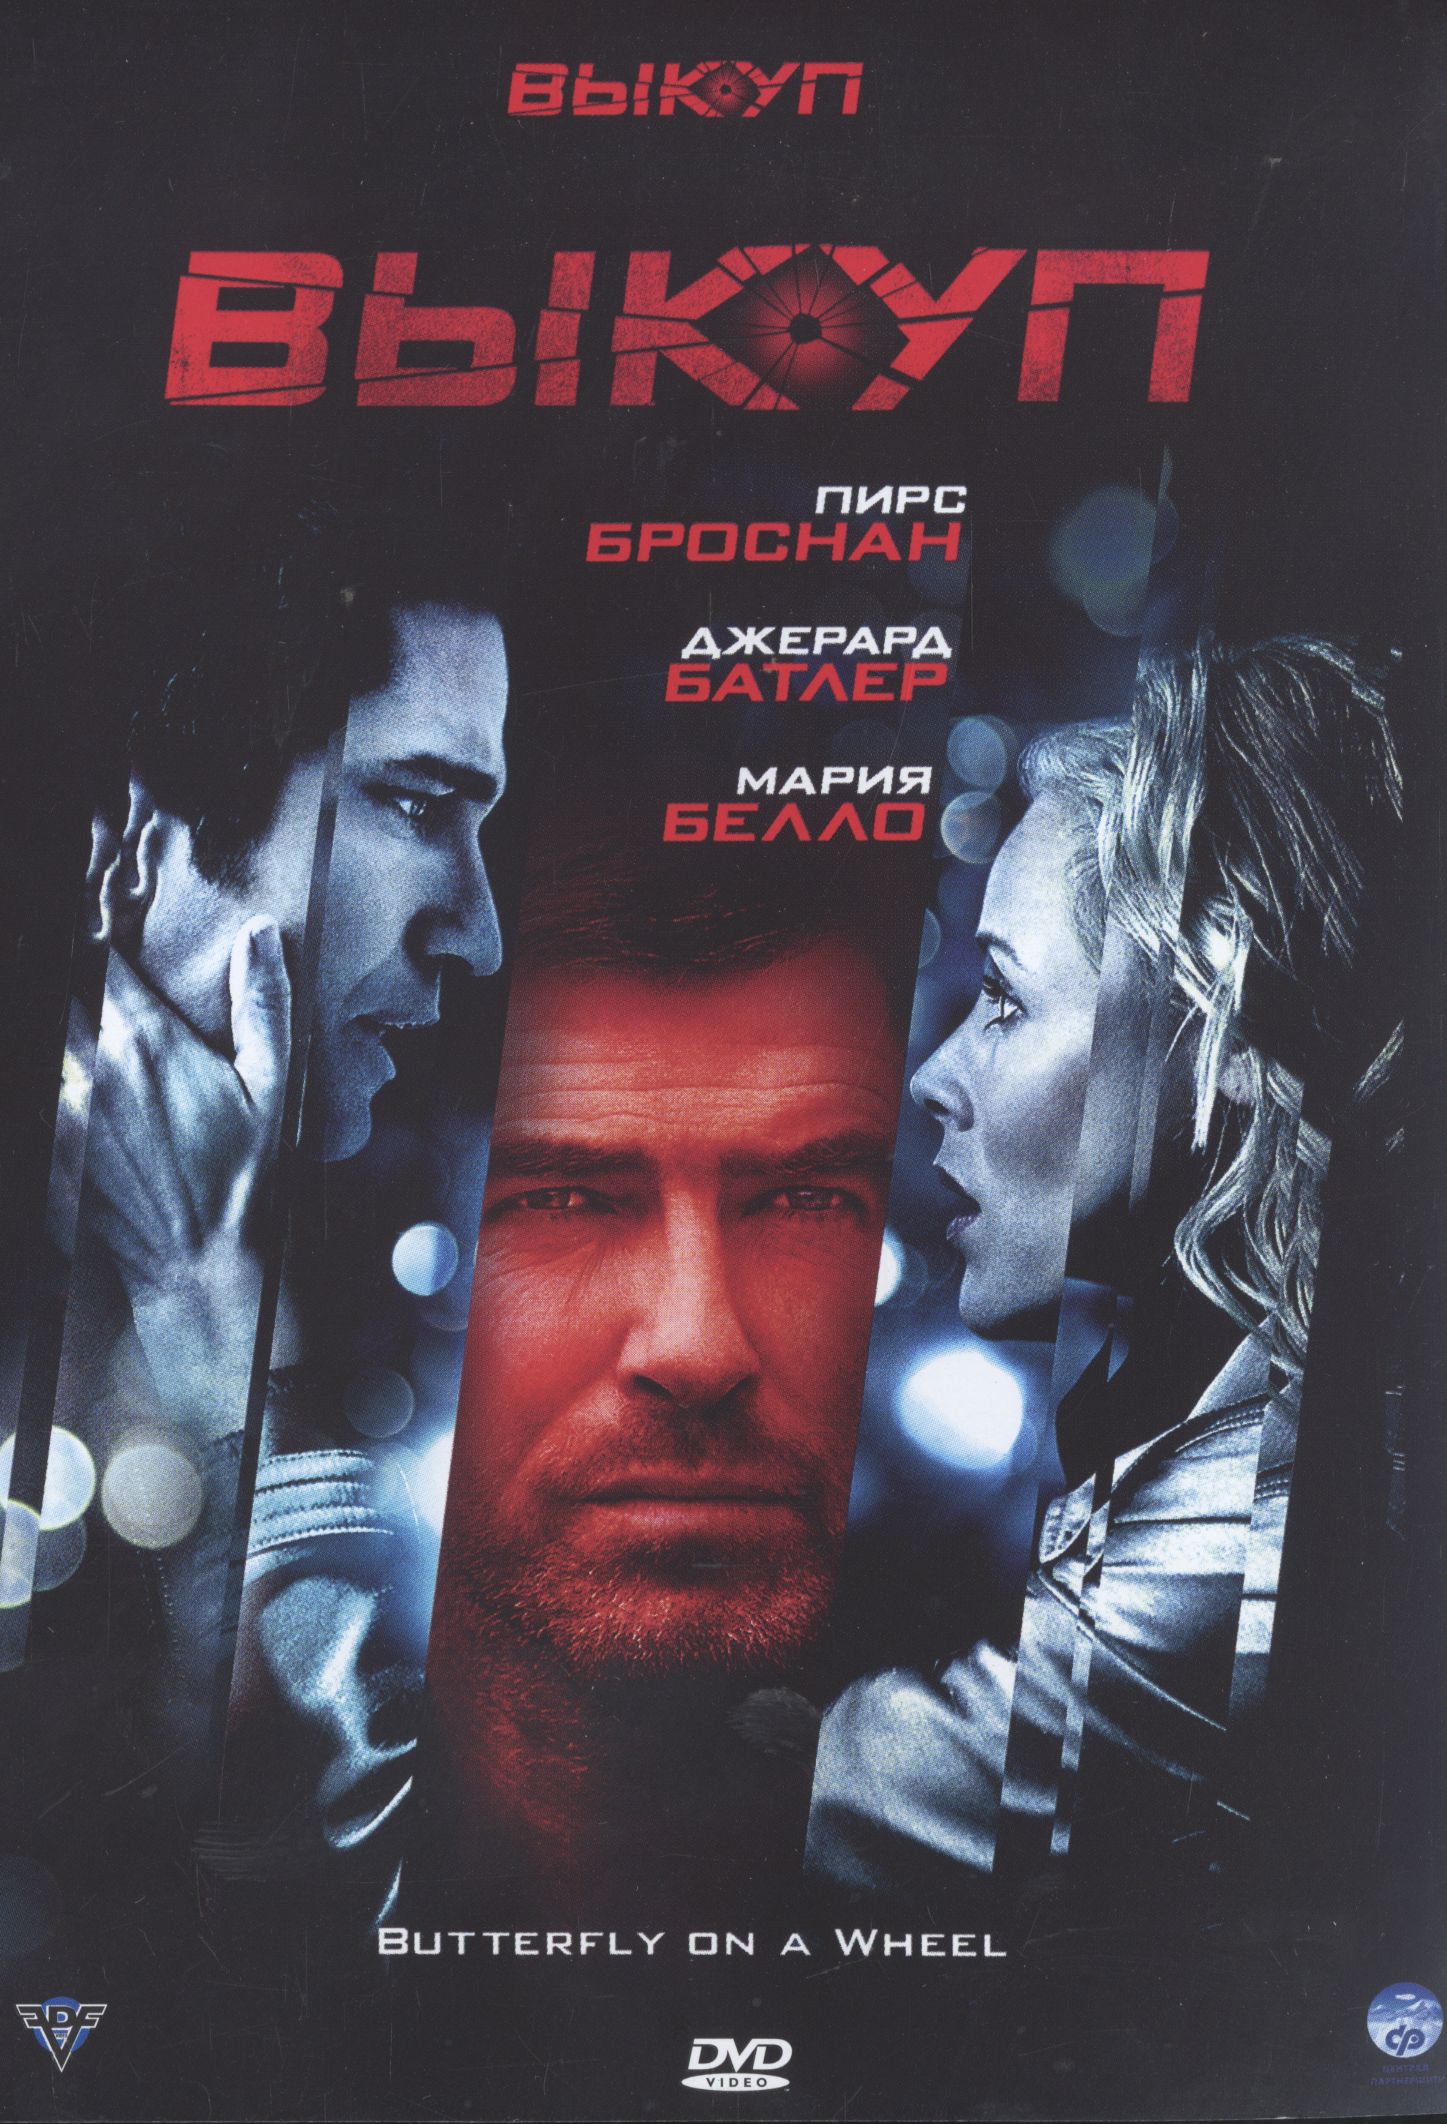  DVD/2006